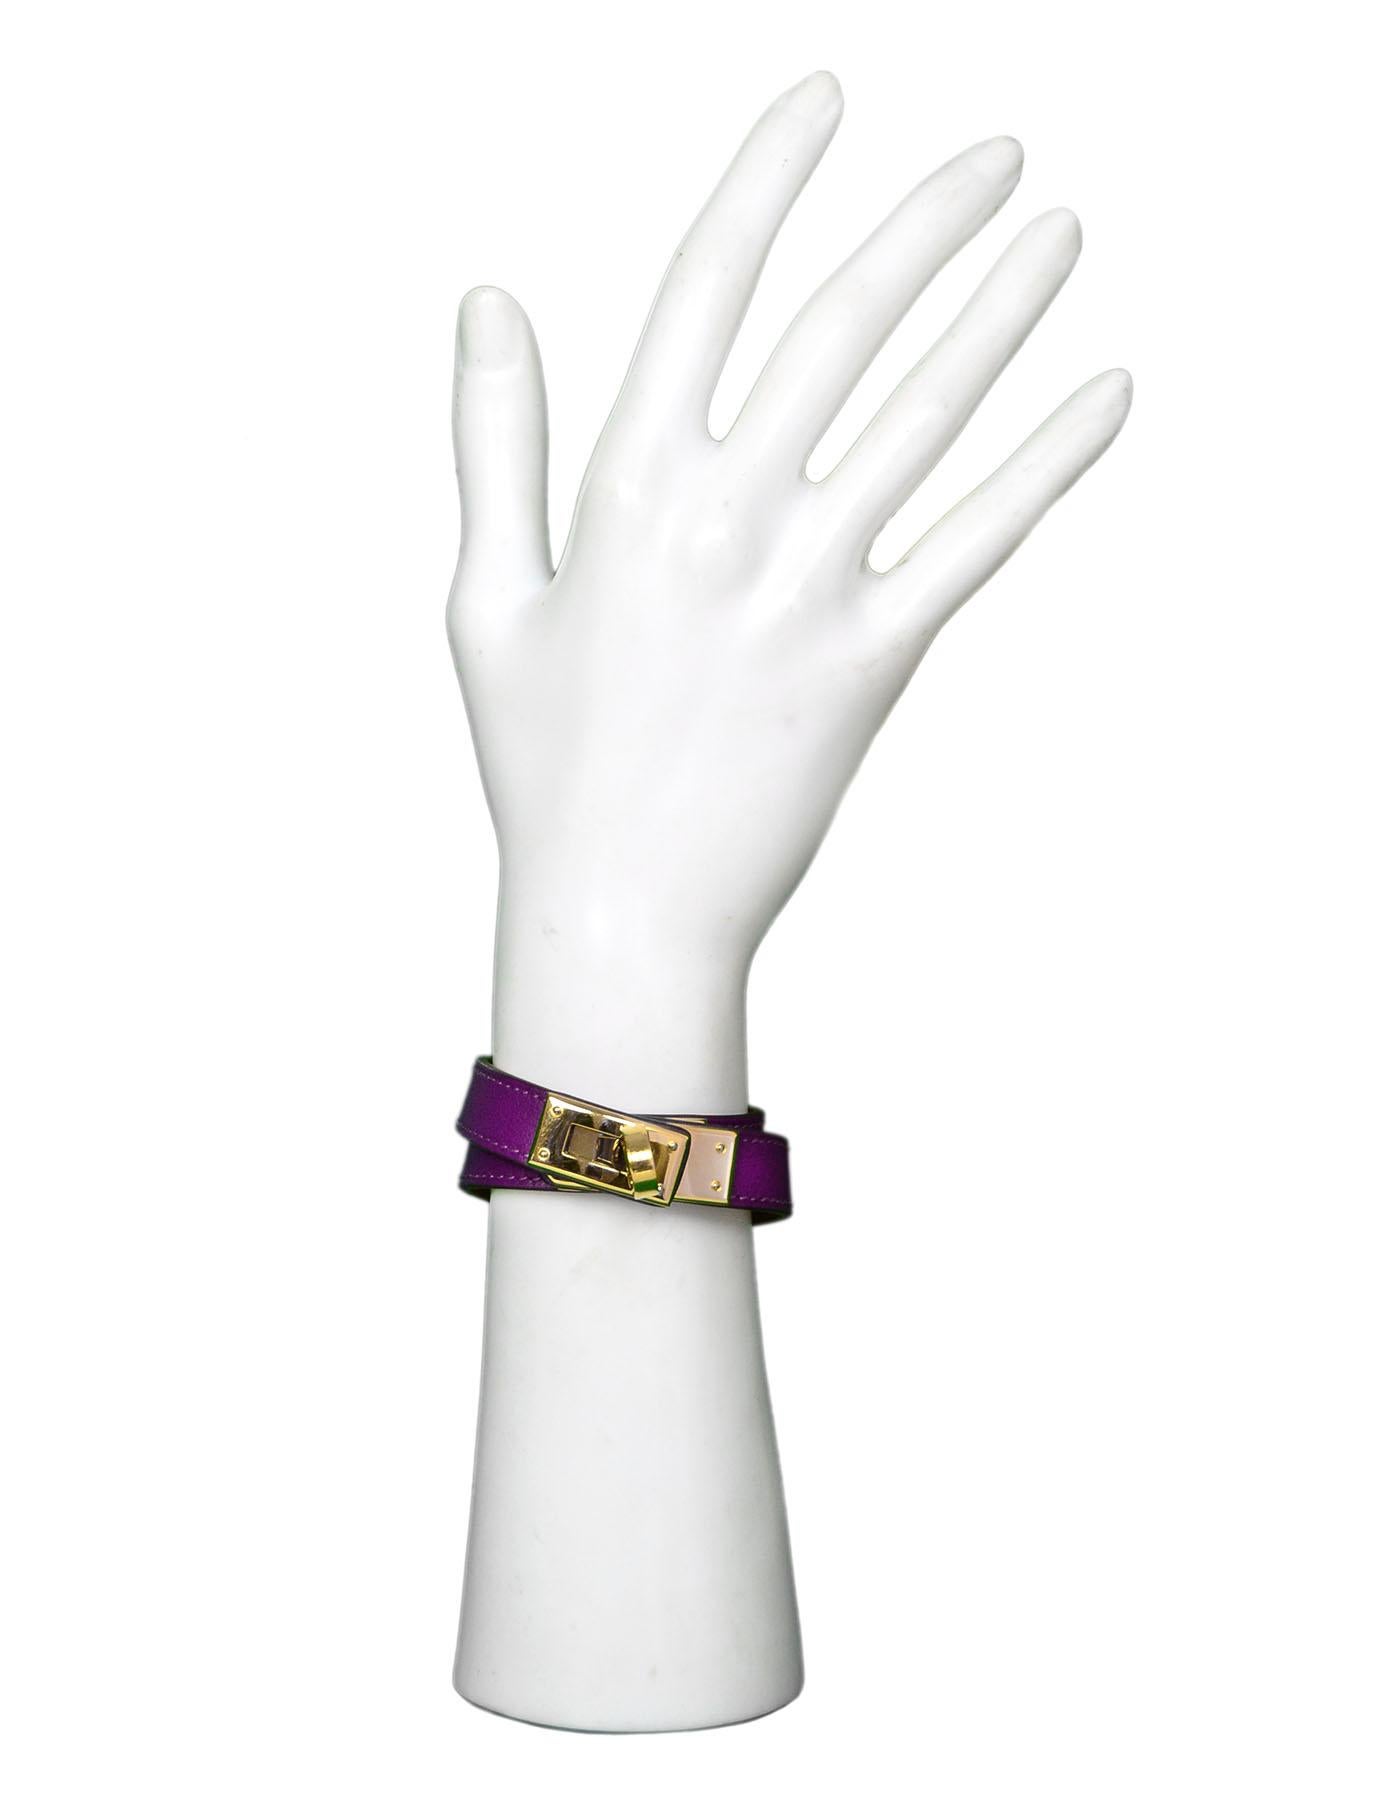 Hermes Purple Leather Kelly Double Tour Bracelet Sz S
Features Hermes classic twist lock closure with 